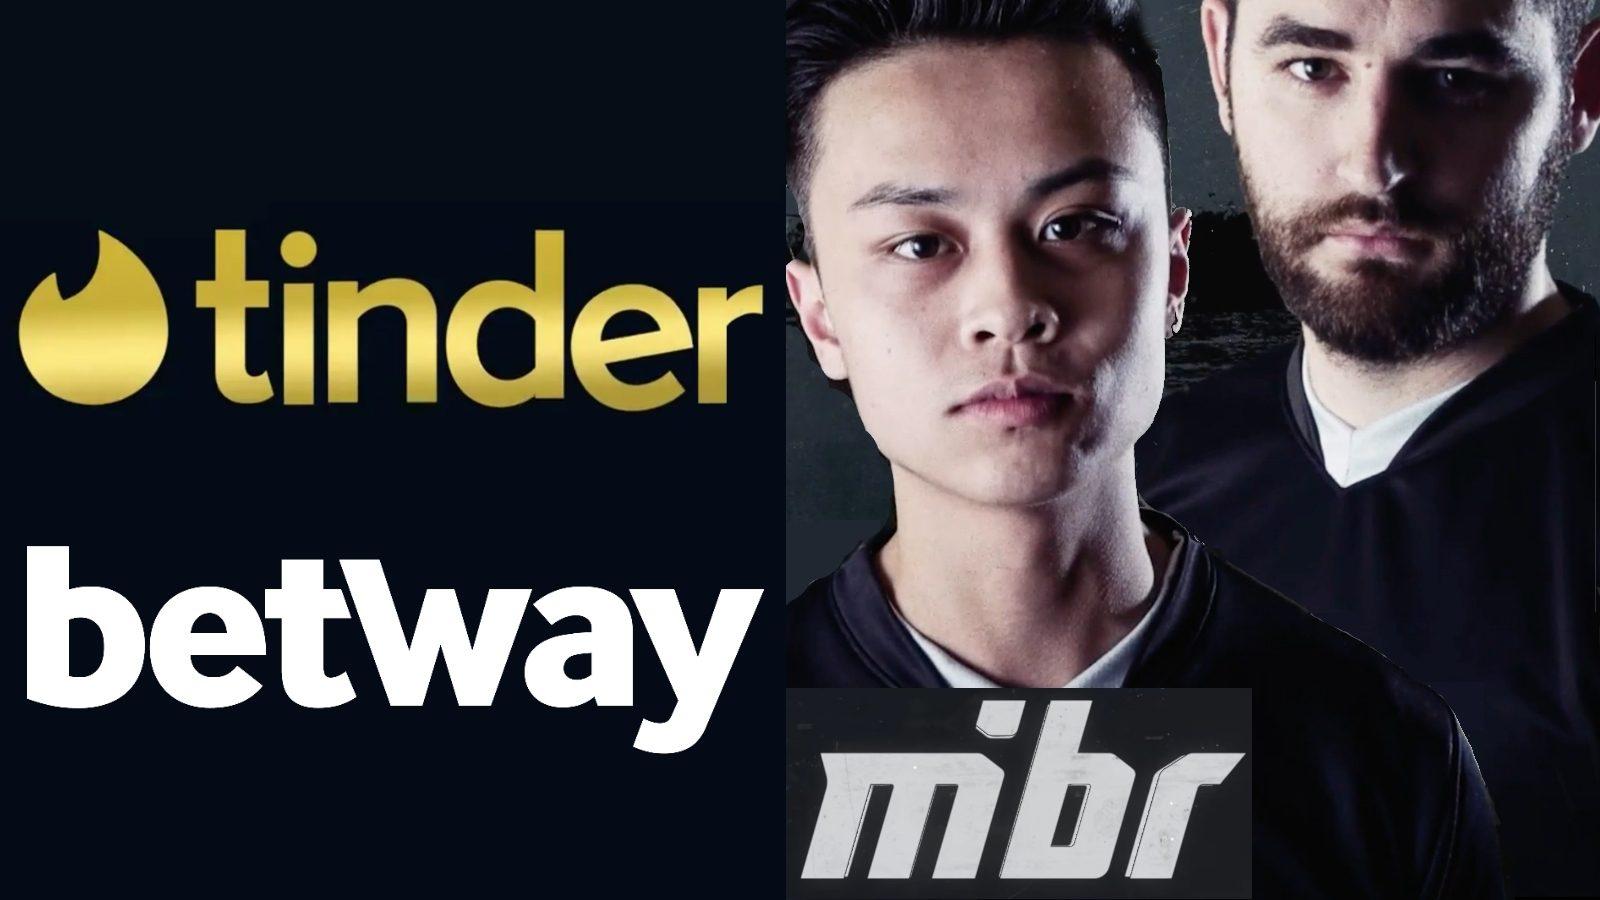 Former SK Gaming Roster Announced as New Made in Brazil (MiBR) CS:GO Team